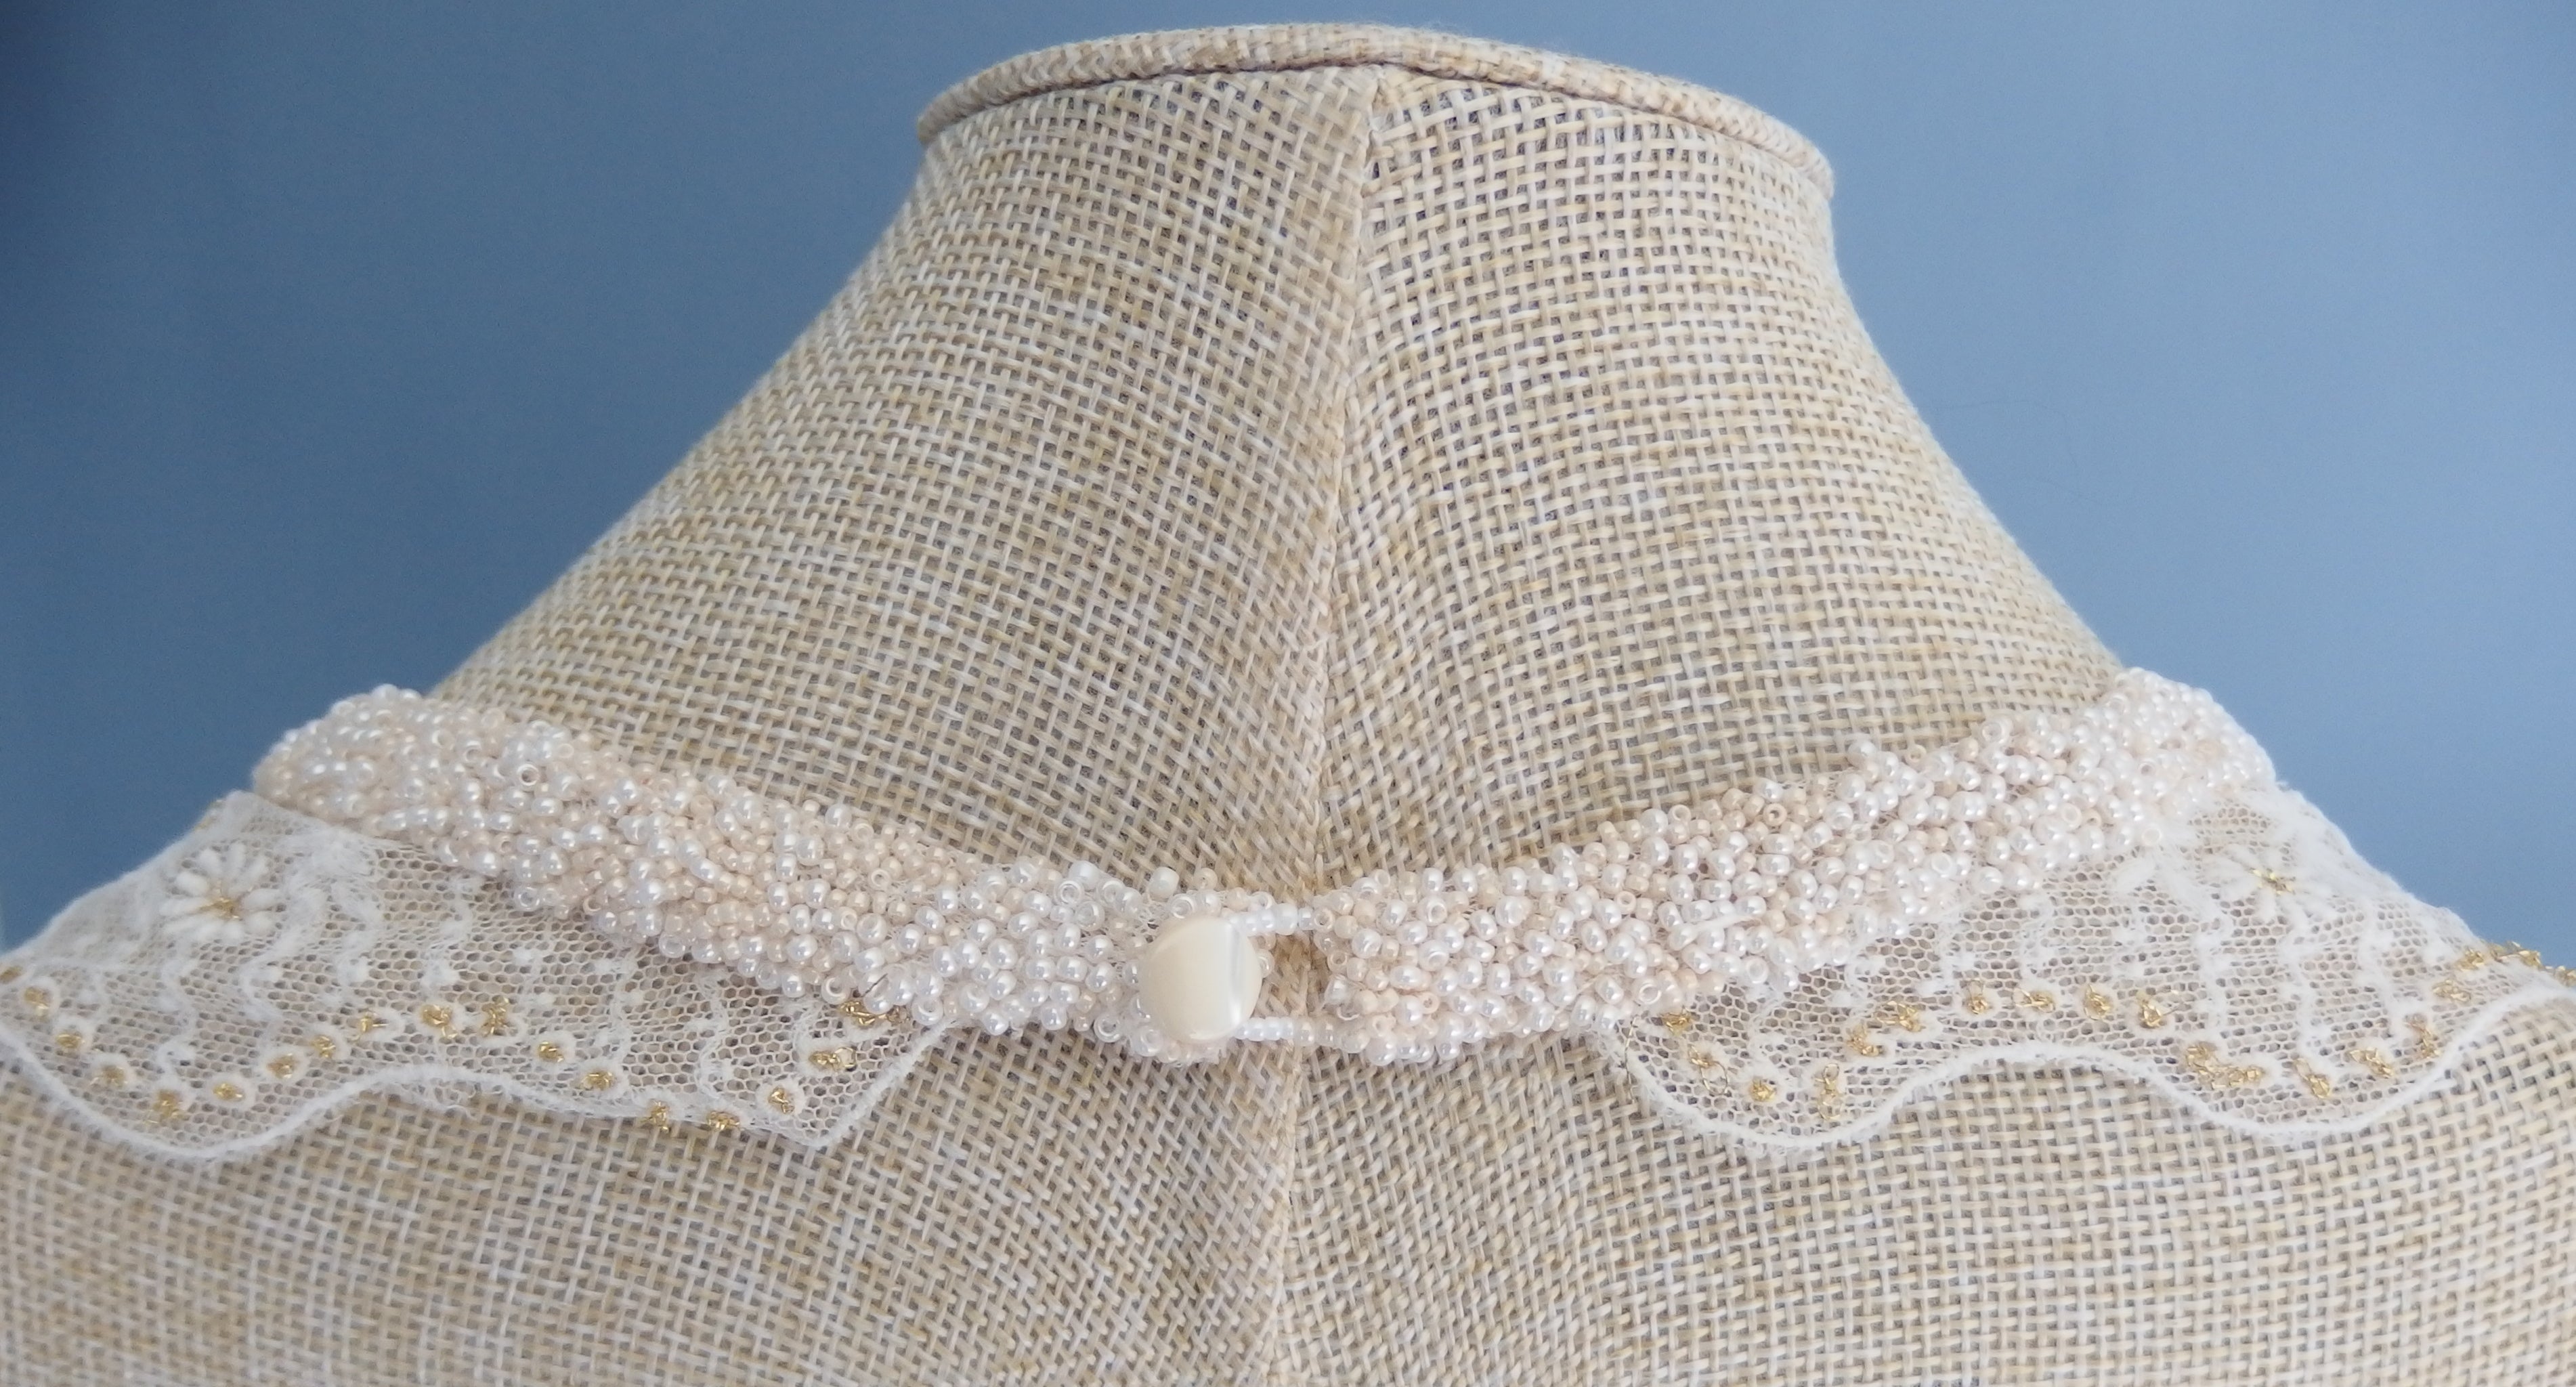 Vintage lace collar